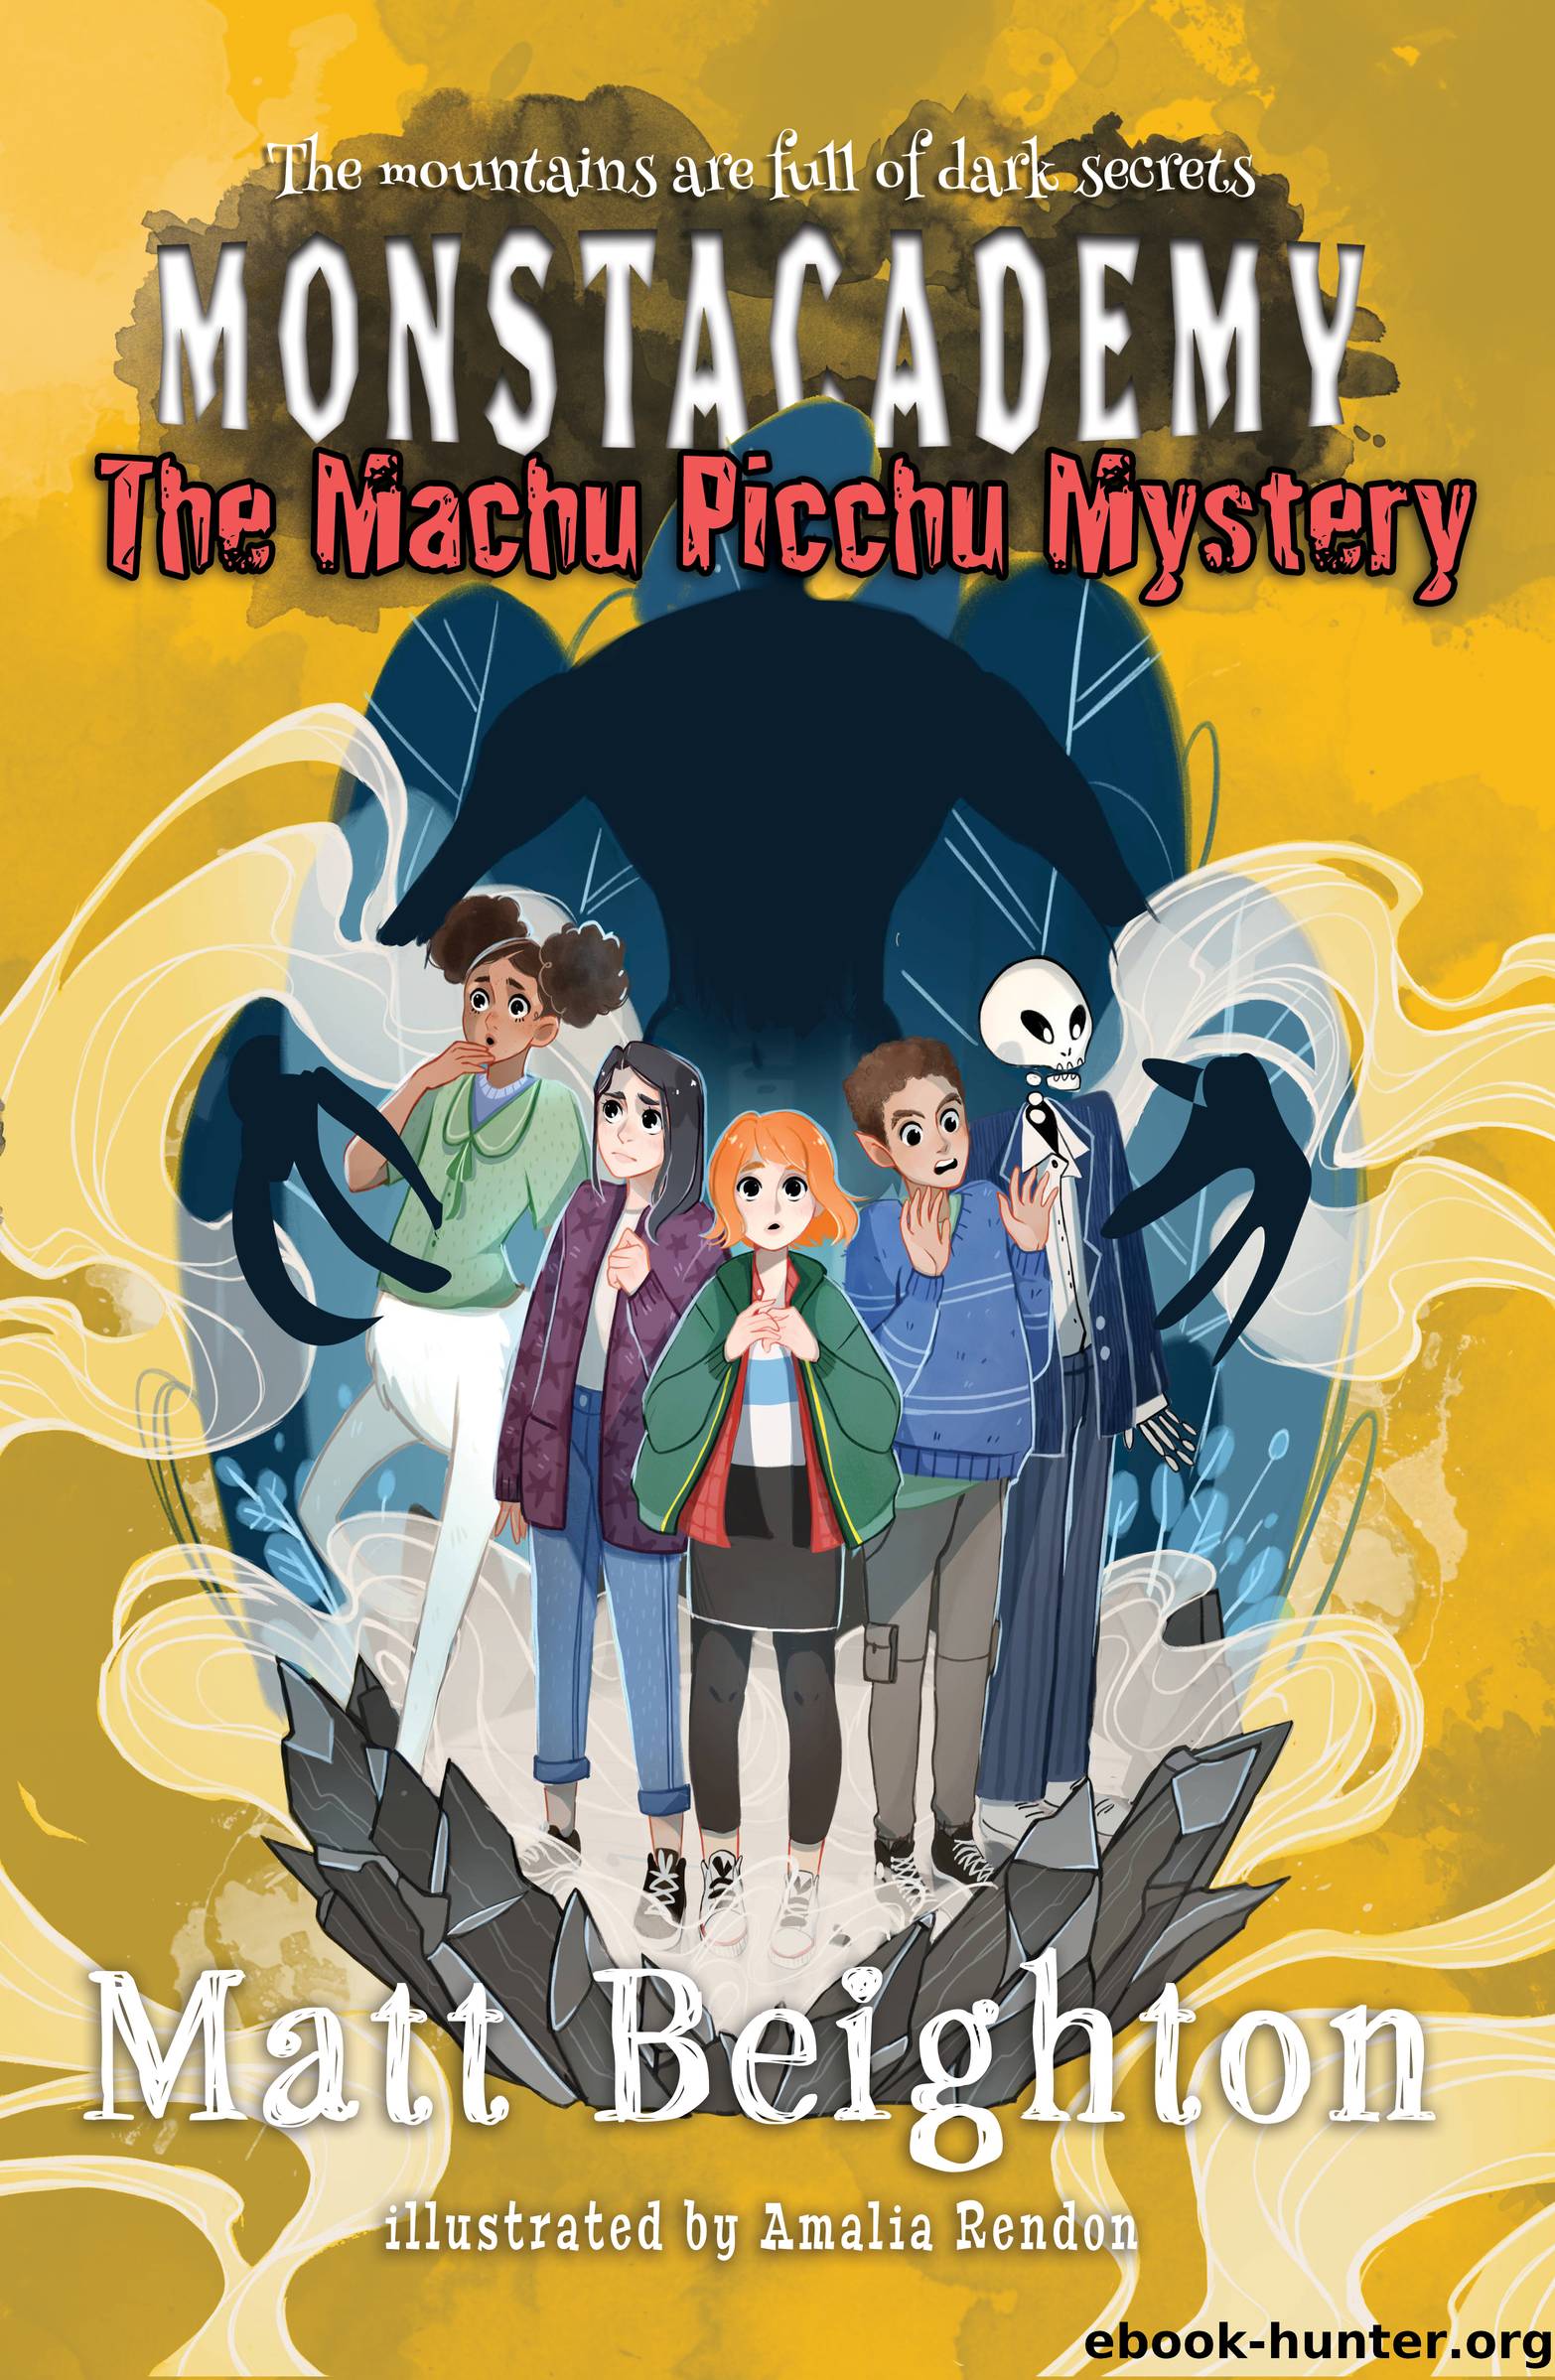 The Machu Picchu Mystery by Matt Beighton